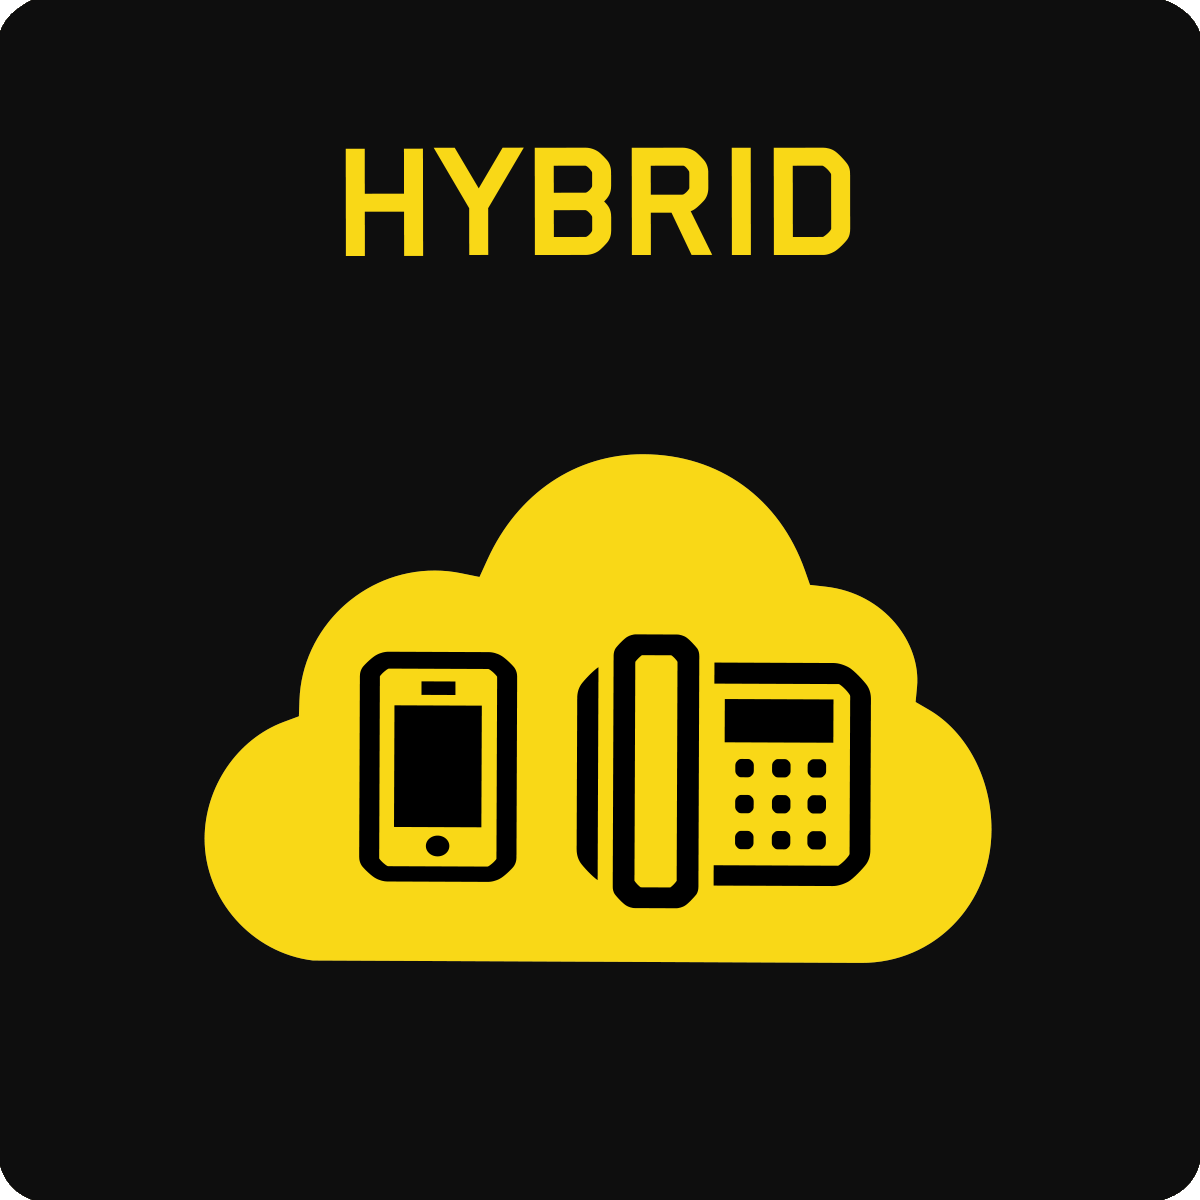 Hybrid cloud communications